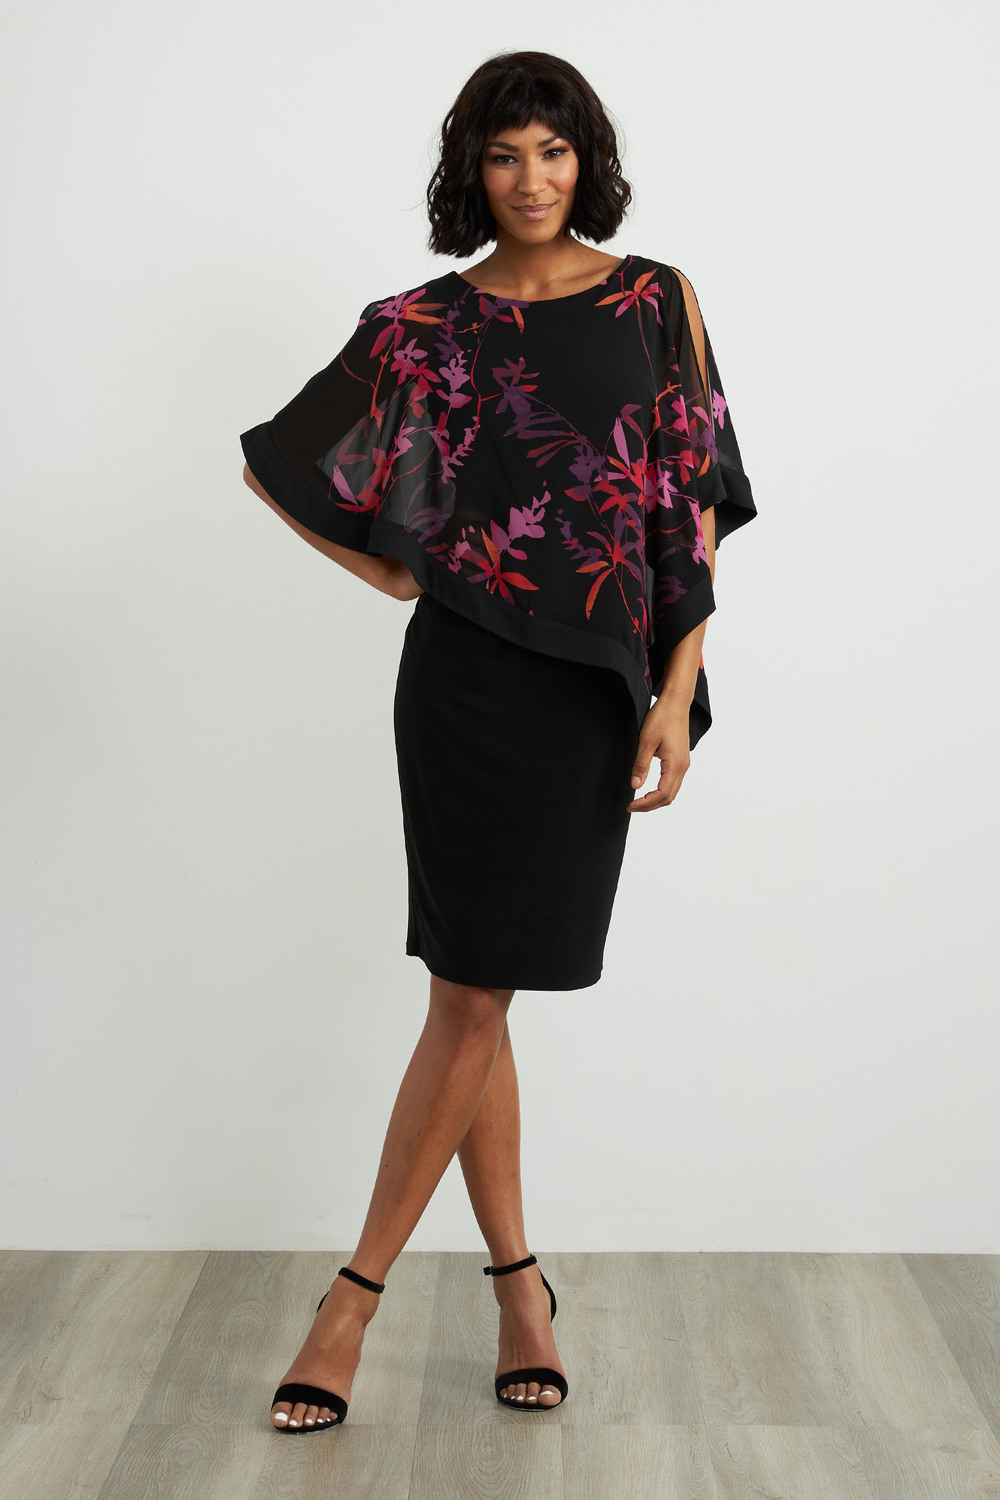 Joseph Ribkoff Floral Dress Style 211374. Black/multi